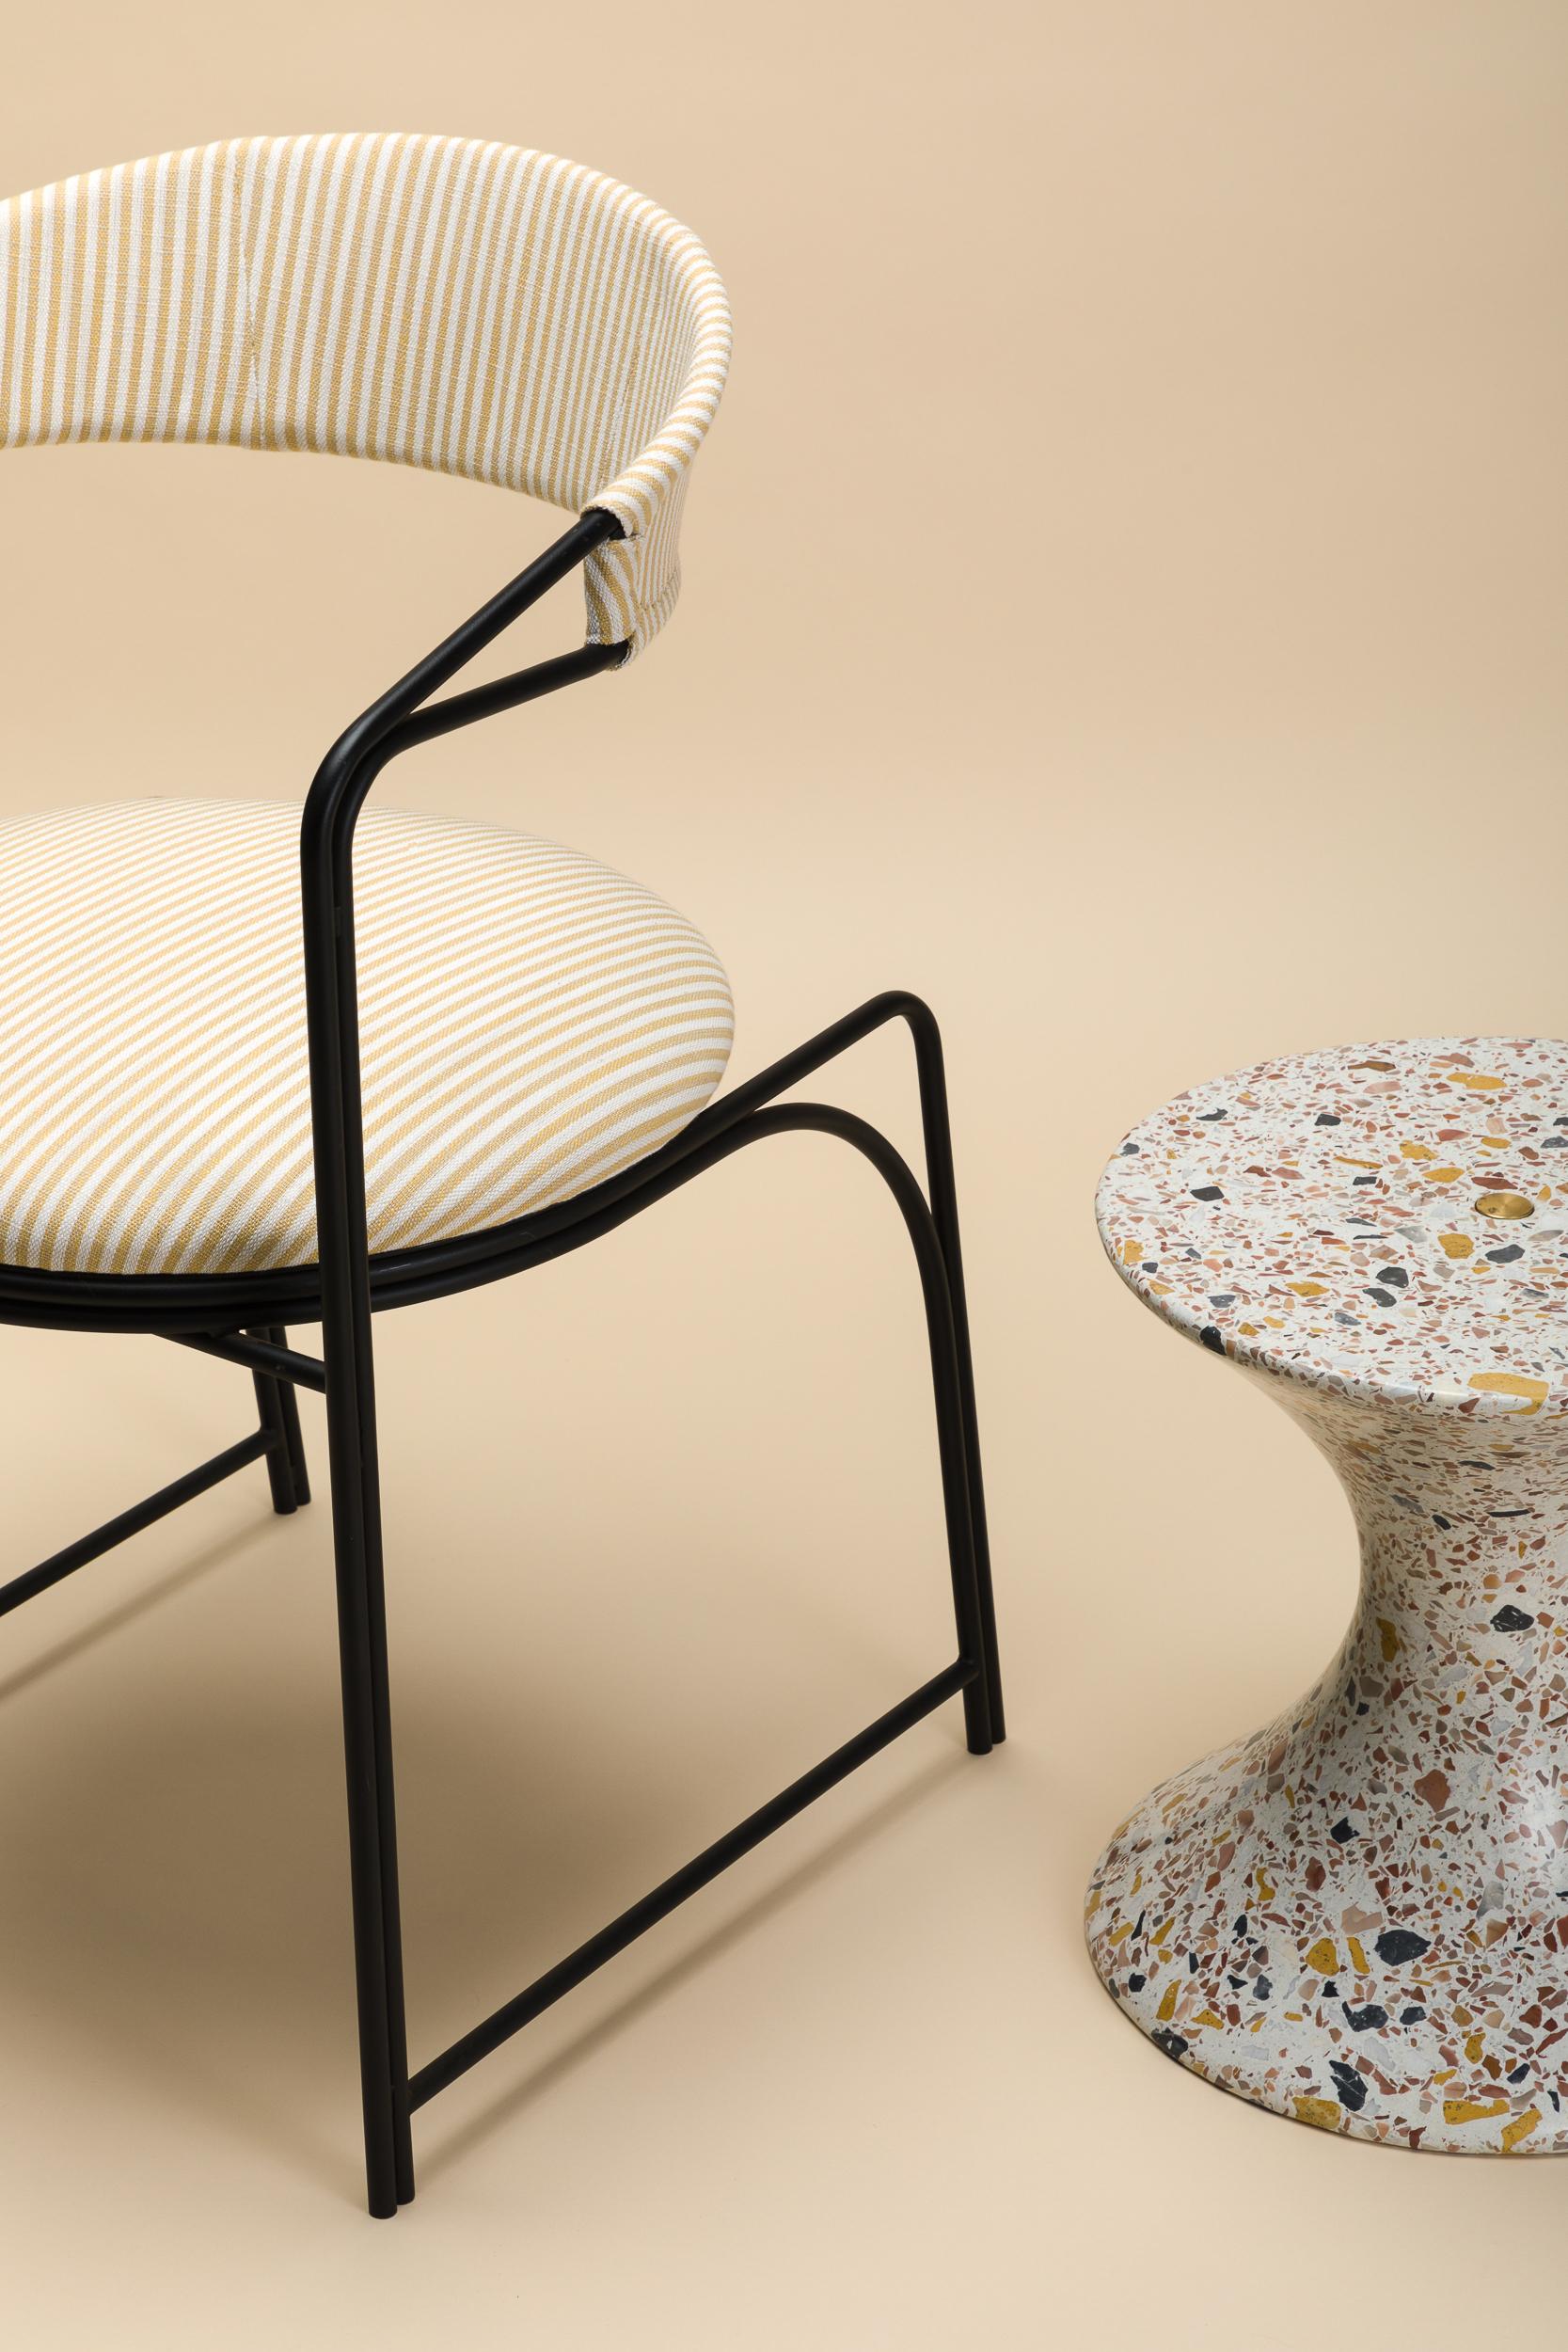 Confetti, Small Contemporary Indoor/Outdoor Terrazzo Side Table by Laun For Sale 4